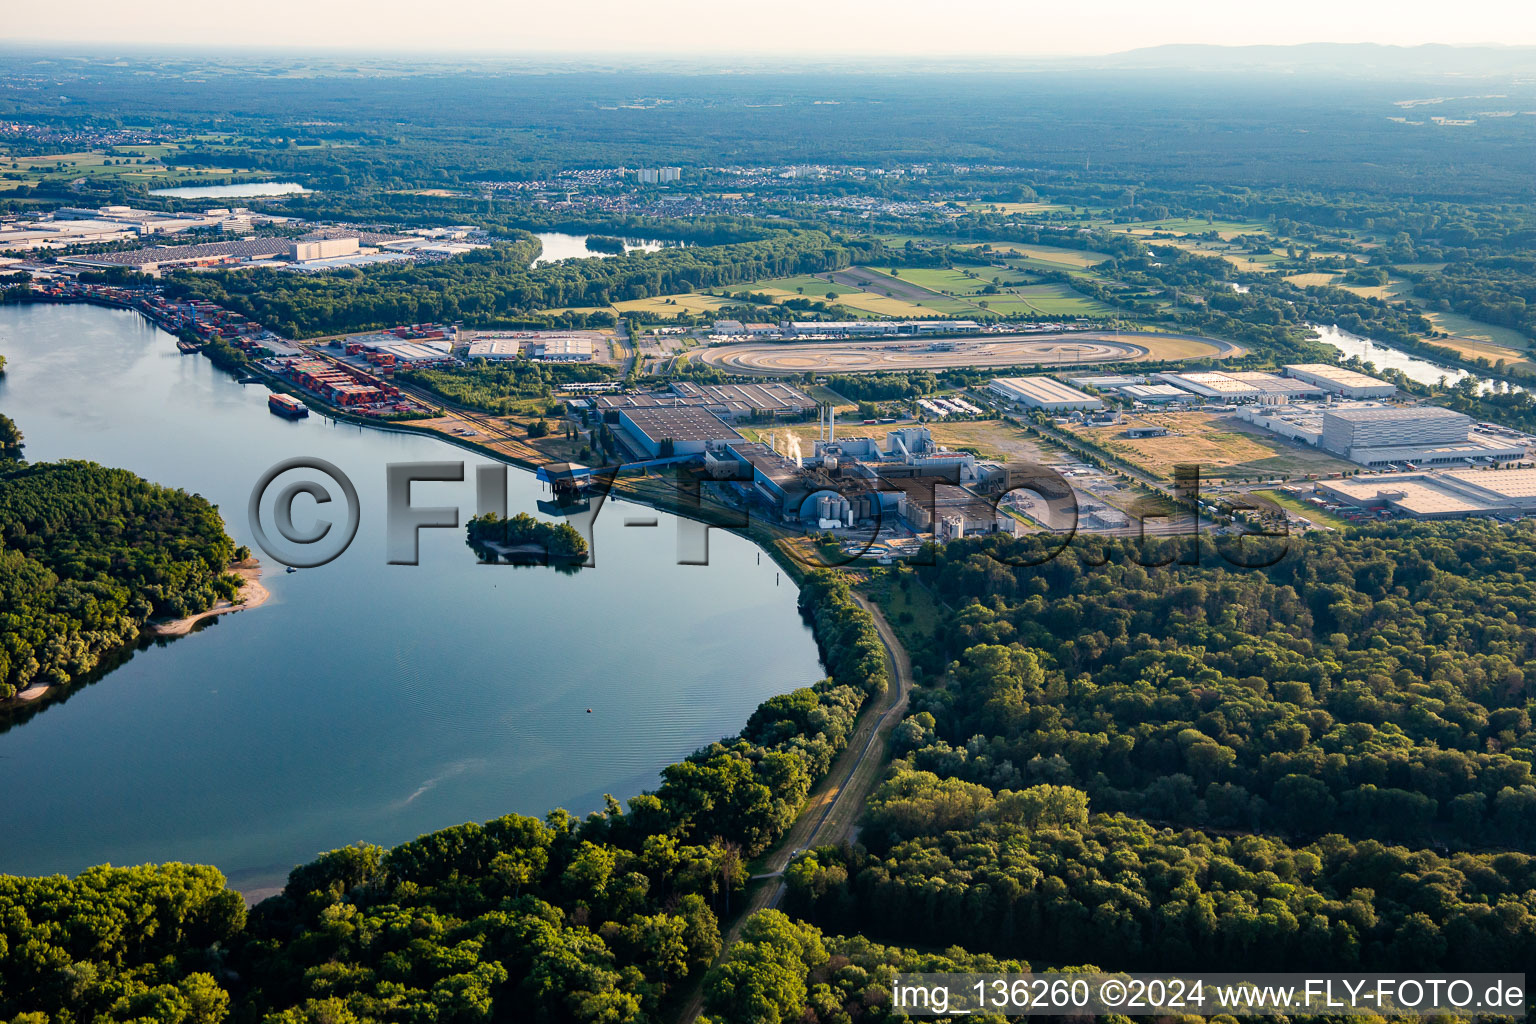 Wörth state port and Oberwald industrial area in Wörth am Rhein in the state Rhineland-Palatinate, Germany